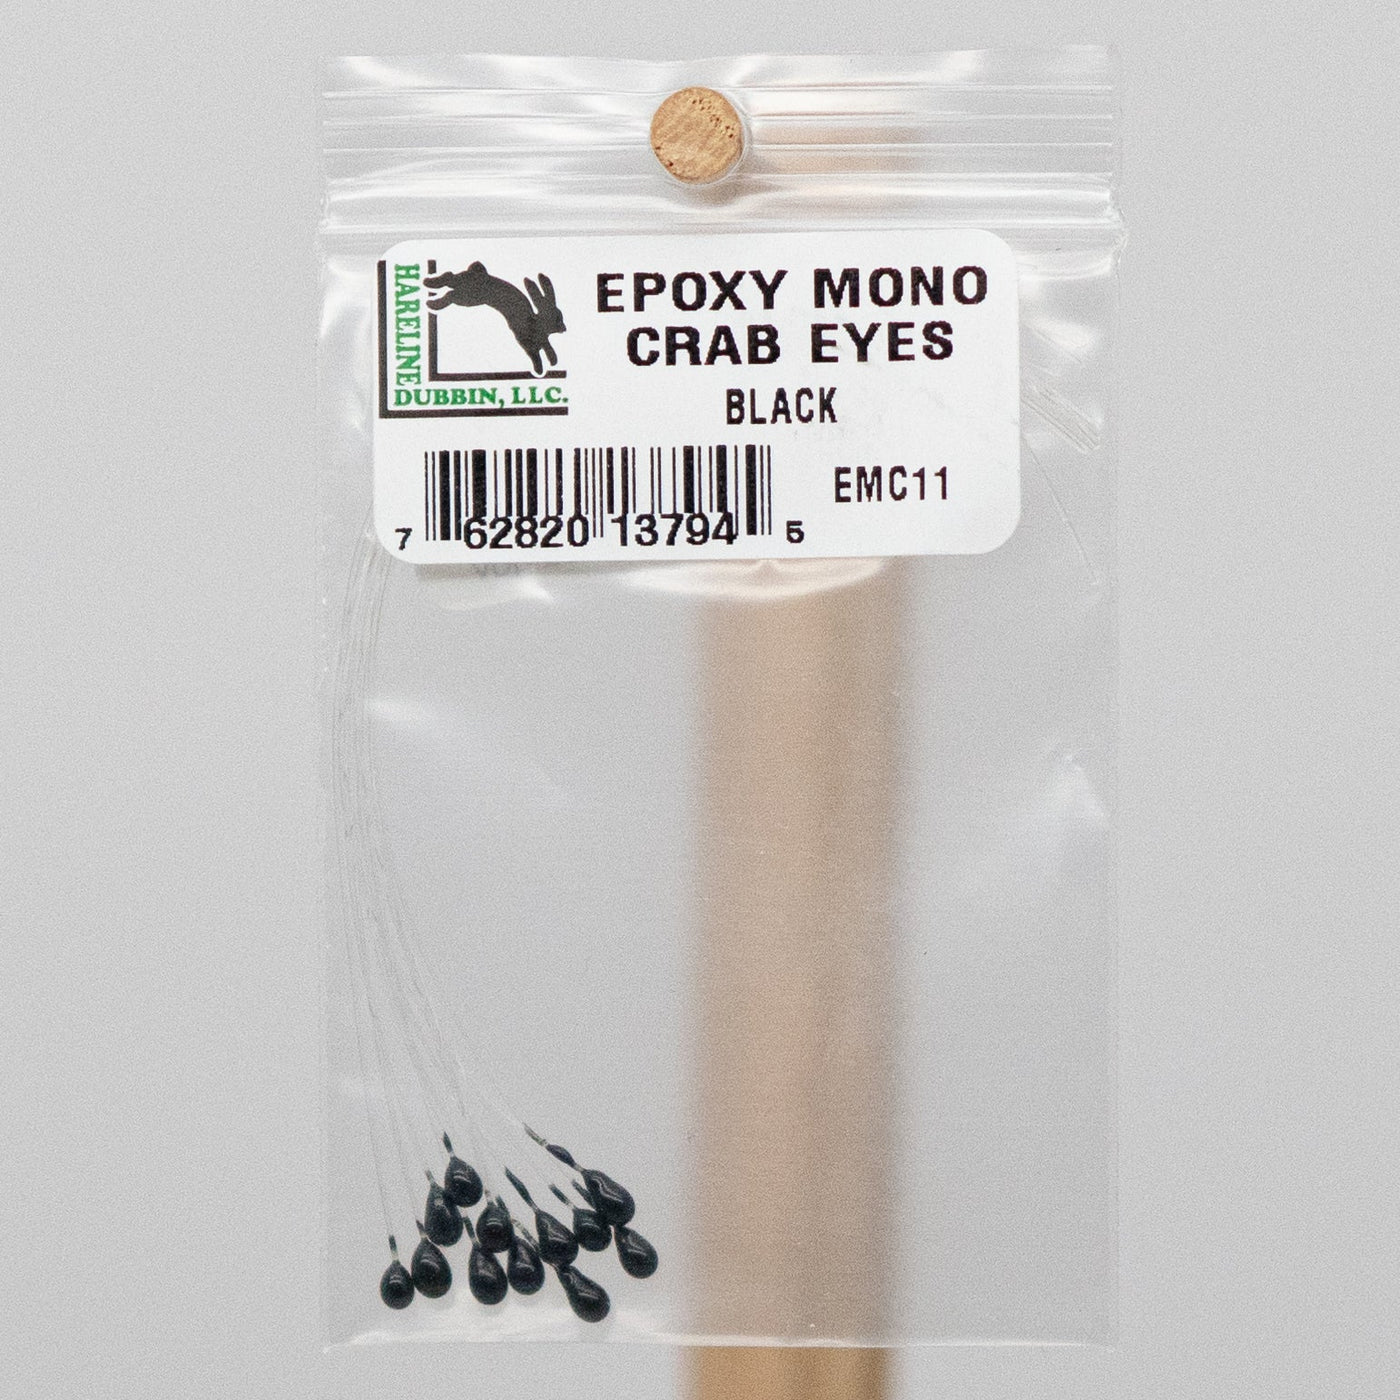 EPOXY MONO CRAB EYES - 2 color options